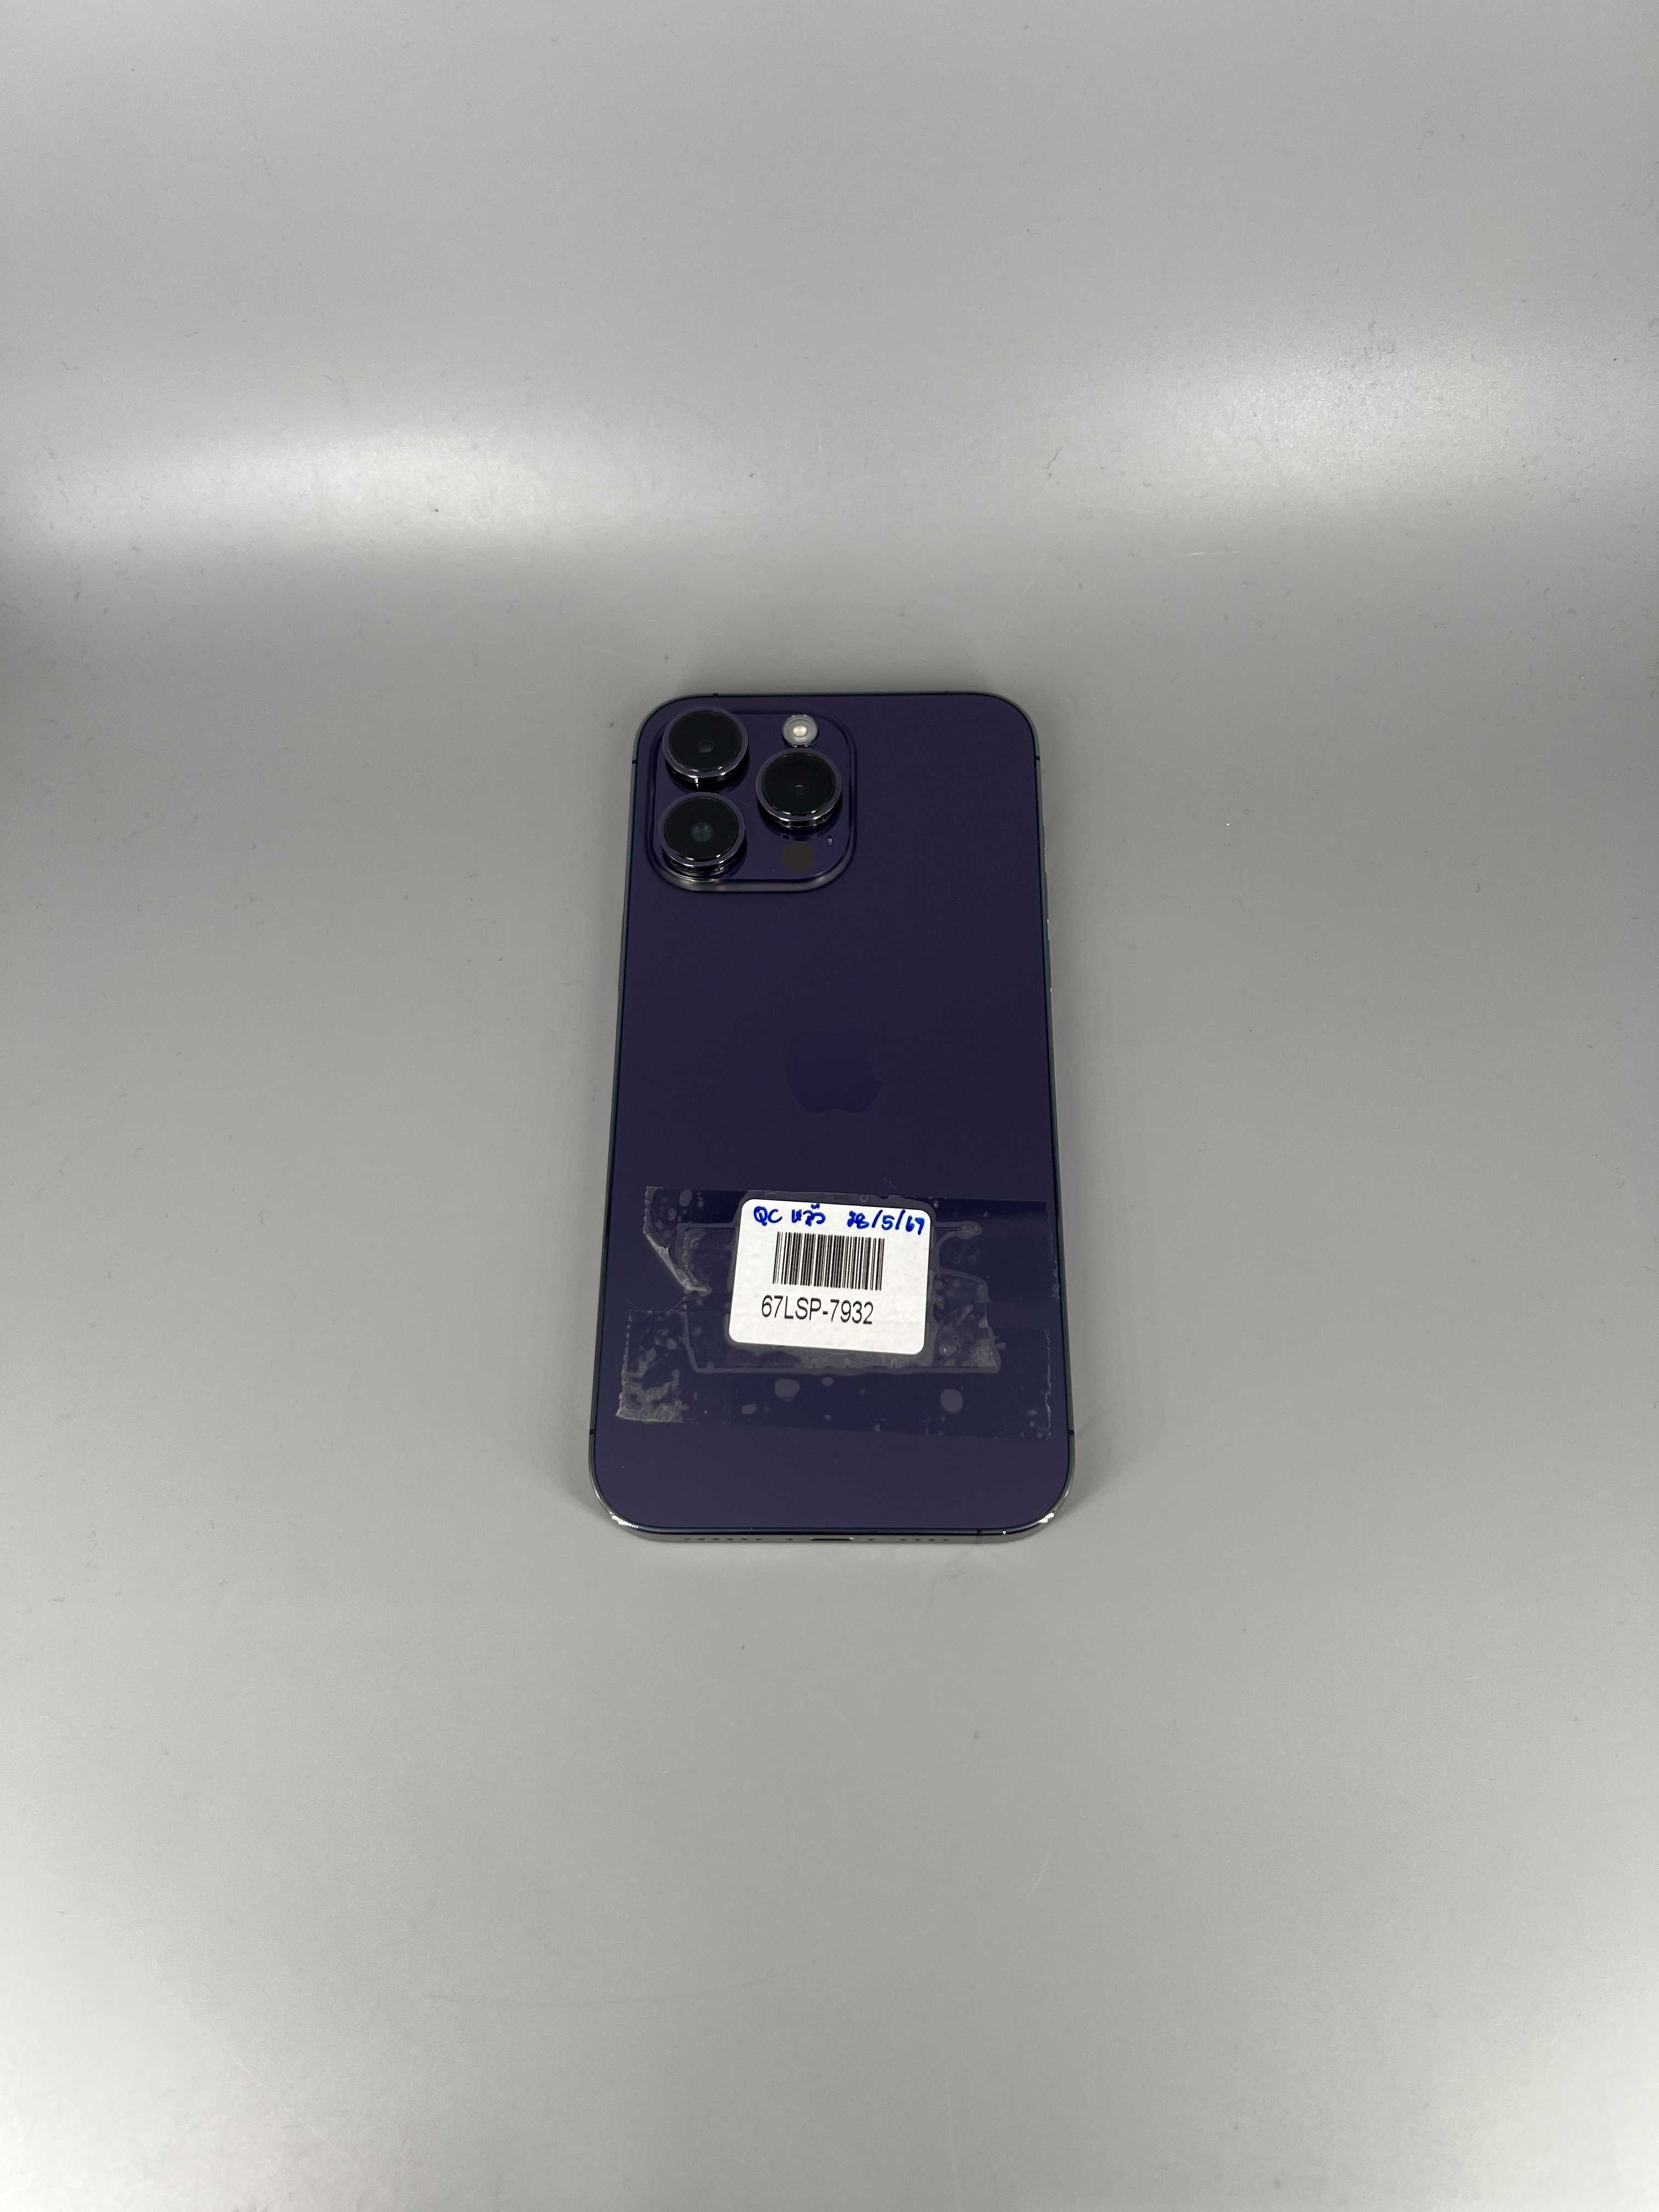 Used iPhone 14 Pro Max 128GB Deep Purple 67LSP-7932